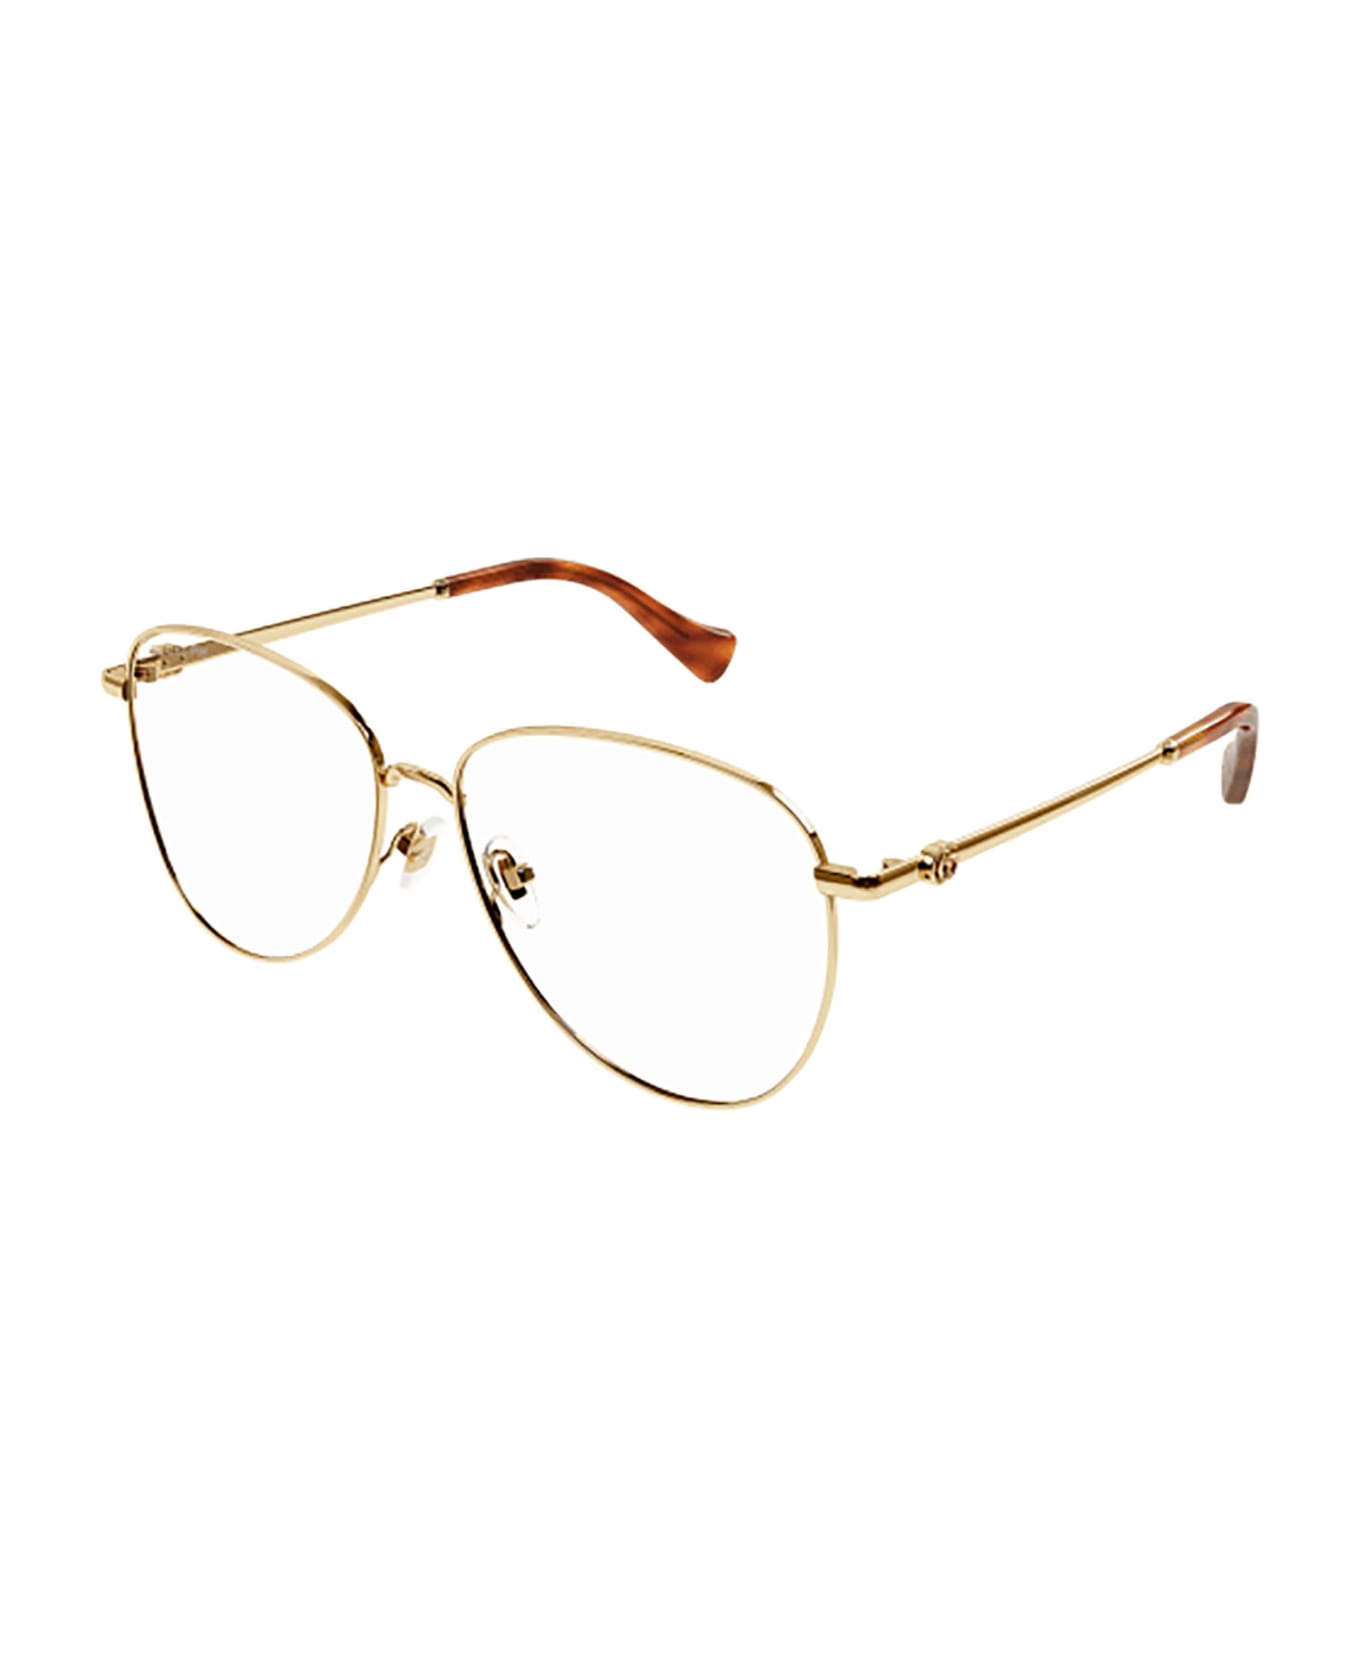 Gucci Eyewear GG1419S Sunglasses - Gold Gold Transparent サングラス